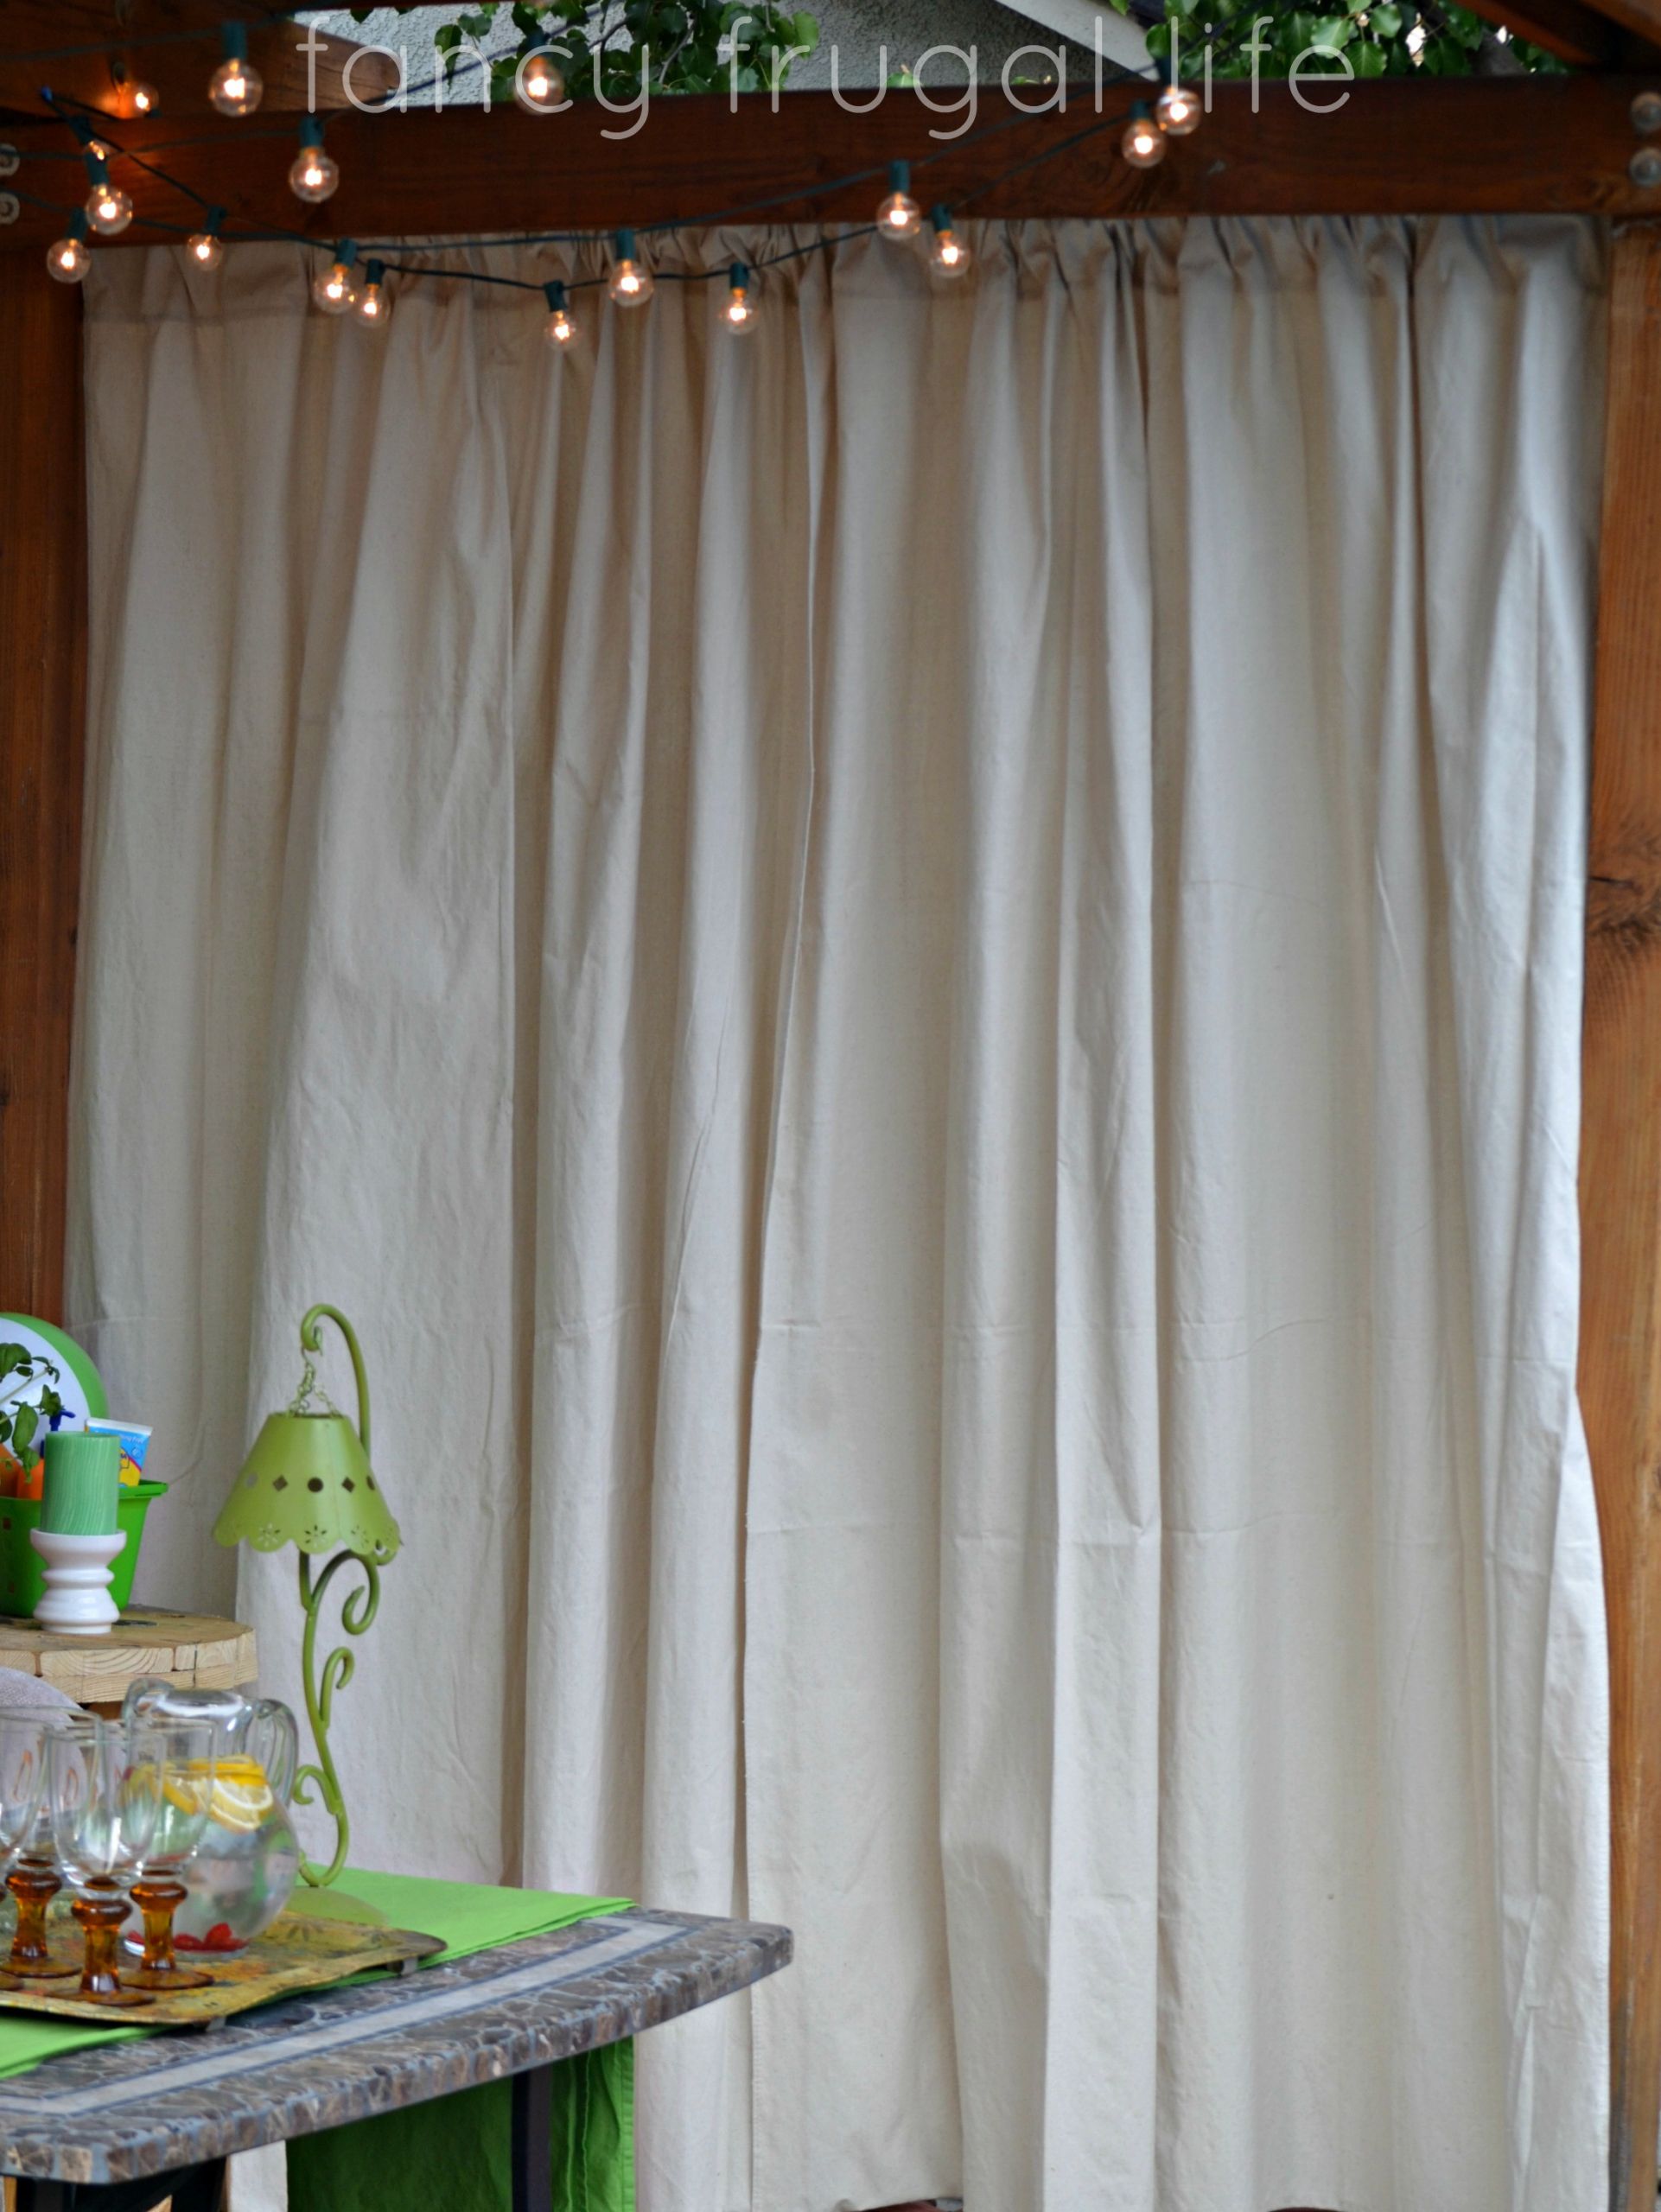 DIY Outdoor Curtains
 “Cabana” Patio Makeover with DIY Drop Cloth Curtains